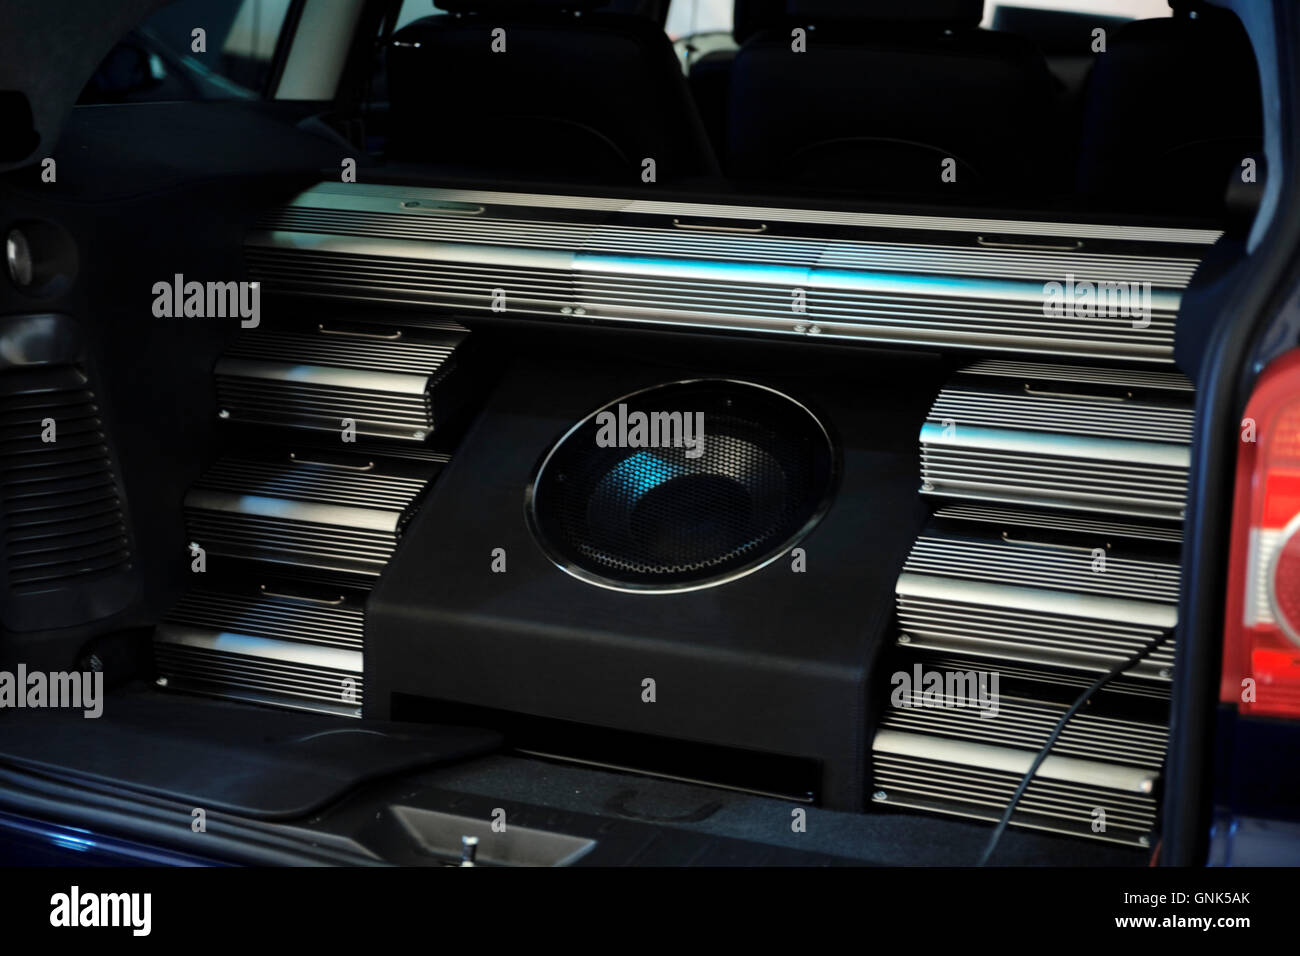 Moderno sistema acústico para escuchar música en el coche Foto de stock